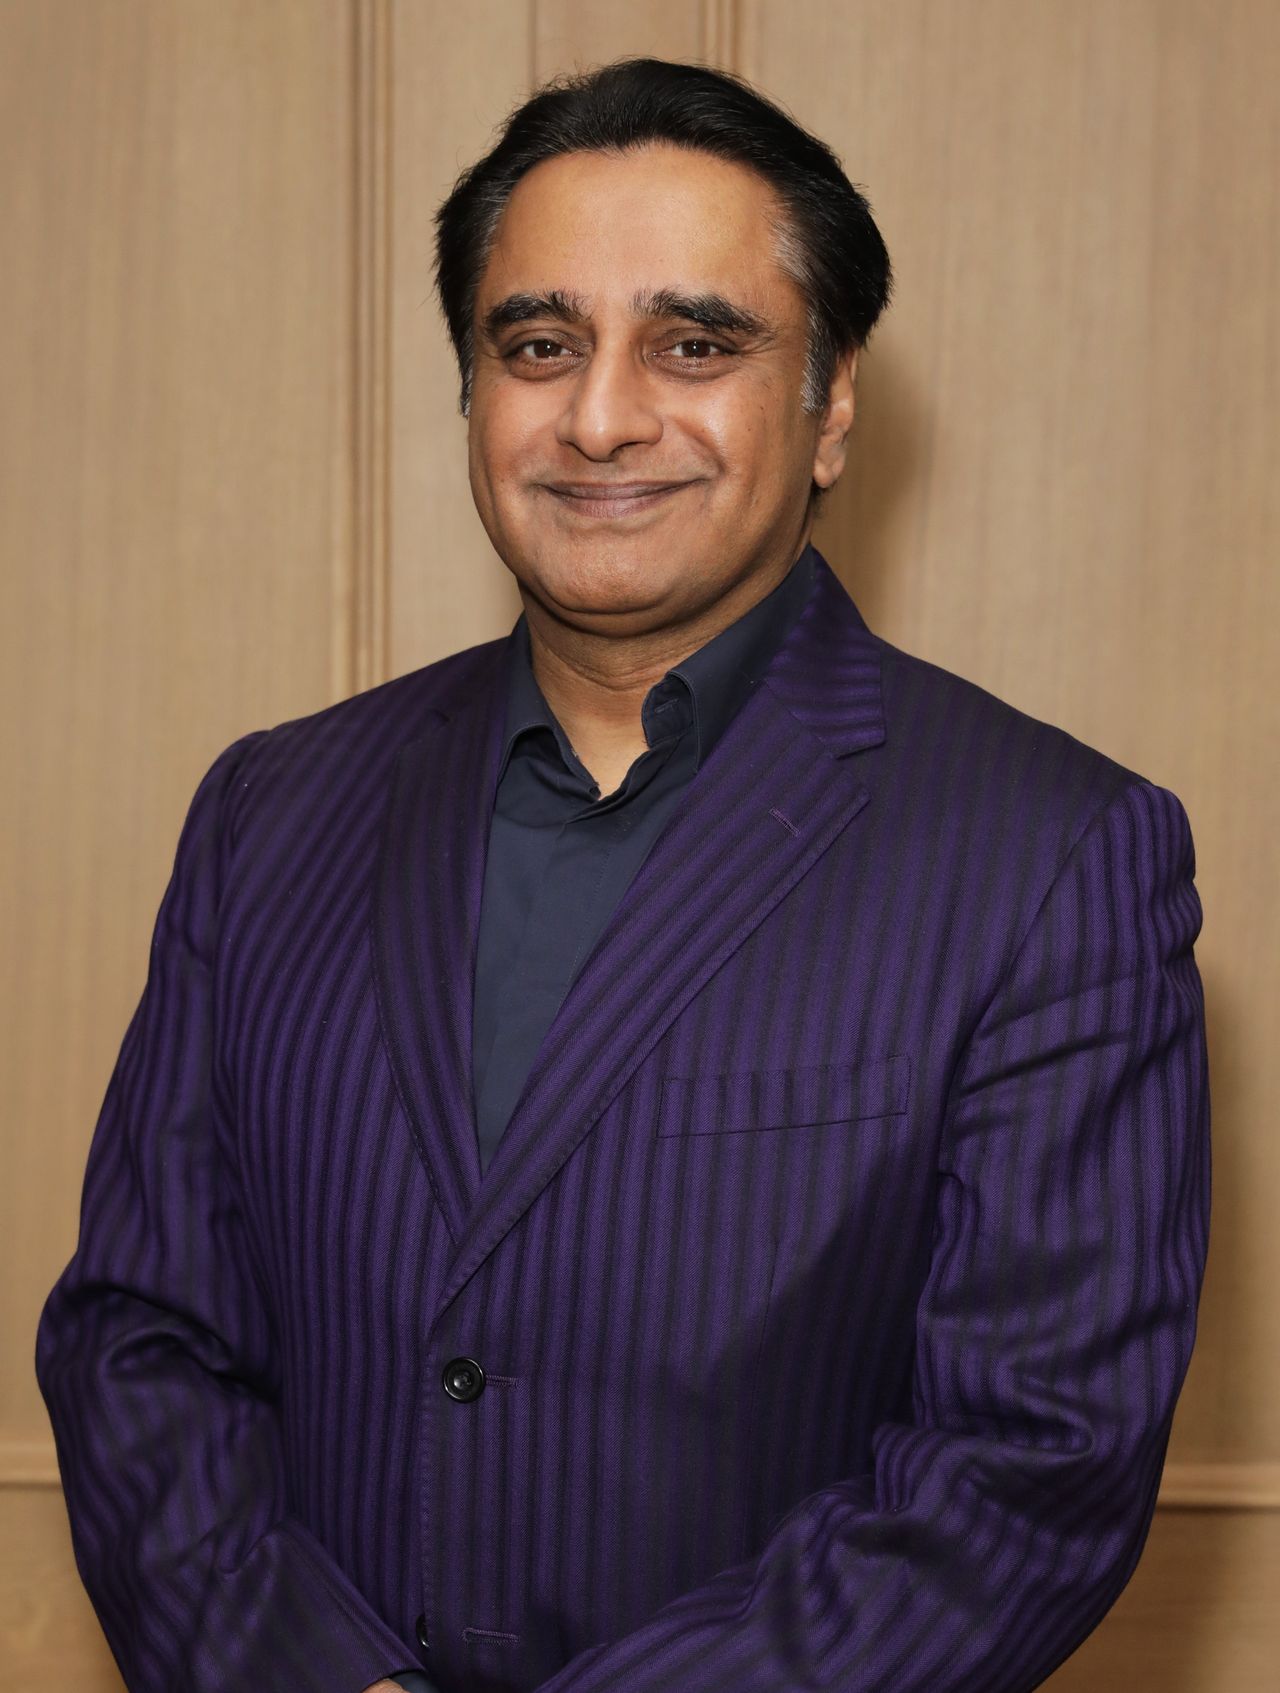 Sanjeev Bhaskar pictured in February 2020